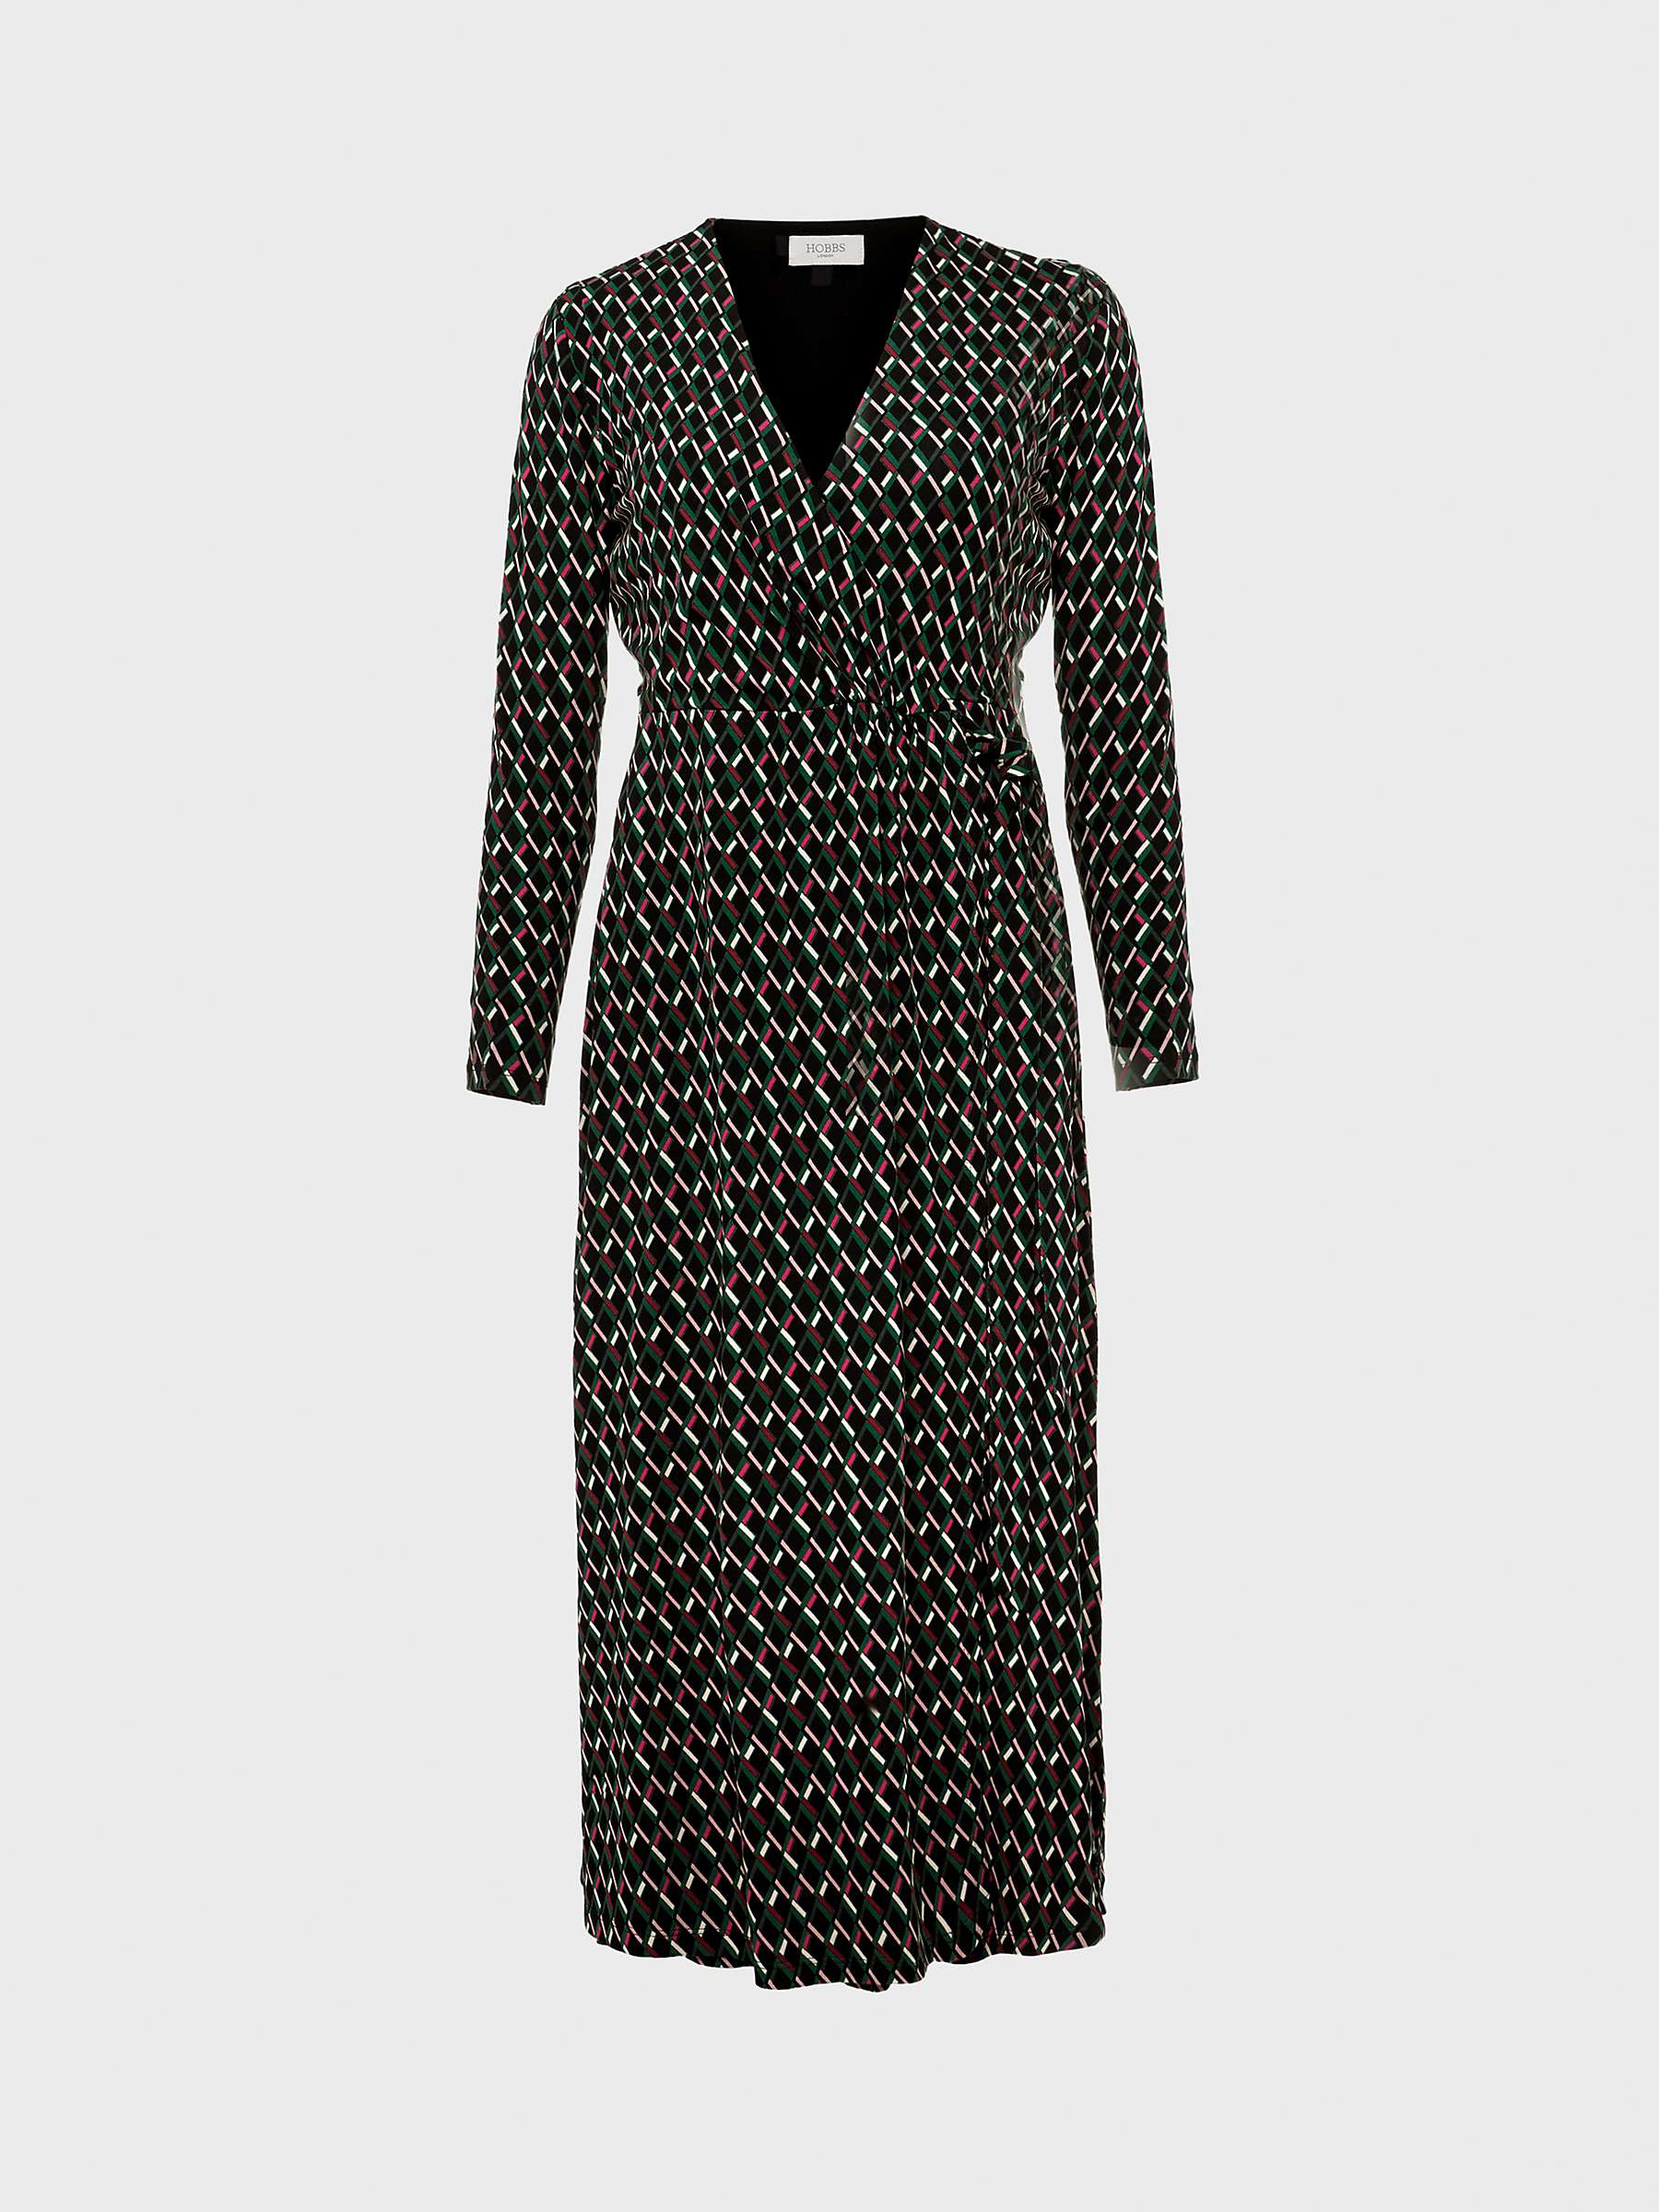 Buy Hobbs Katalina Geometric Print Jersey Dress, Black/Multi Online at johnlewis.com